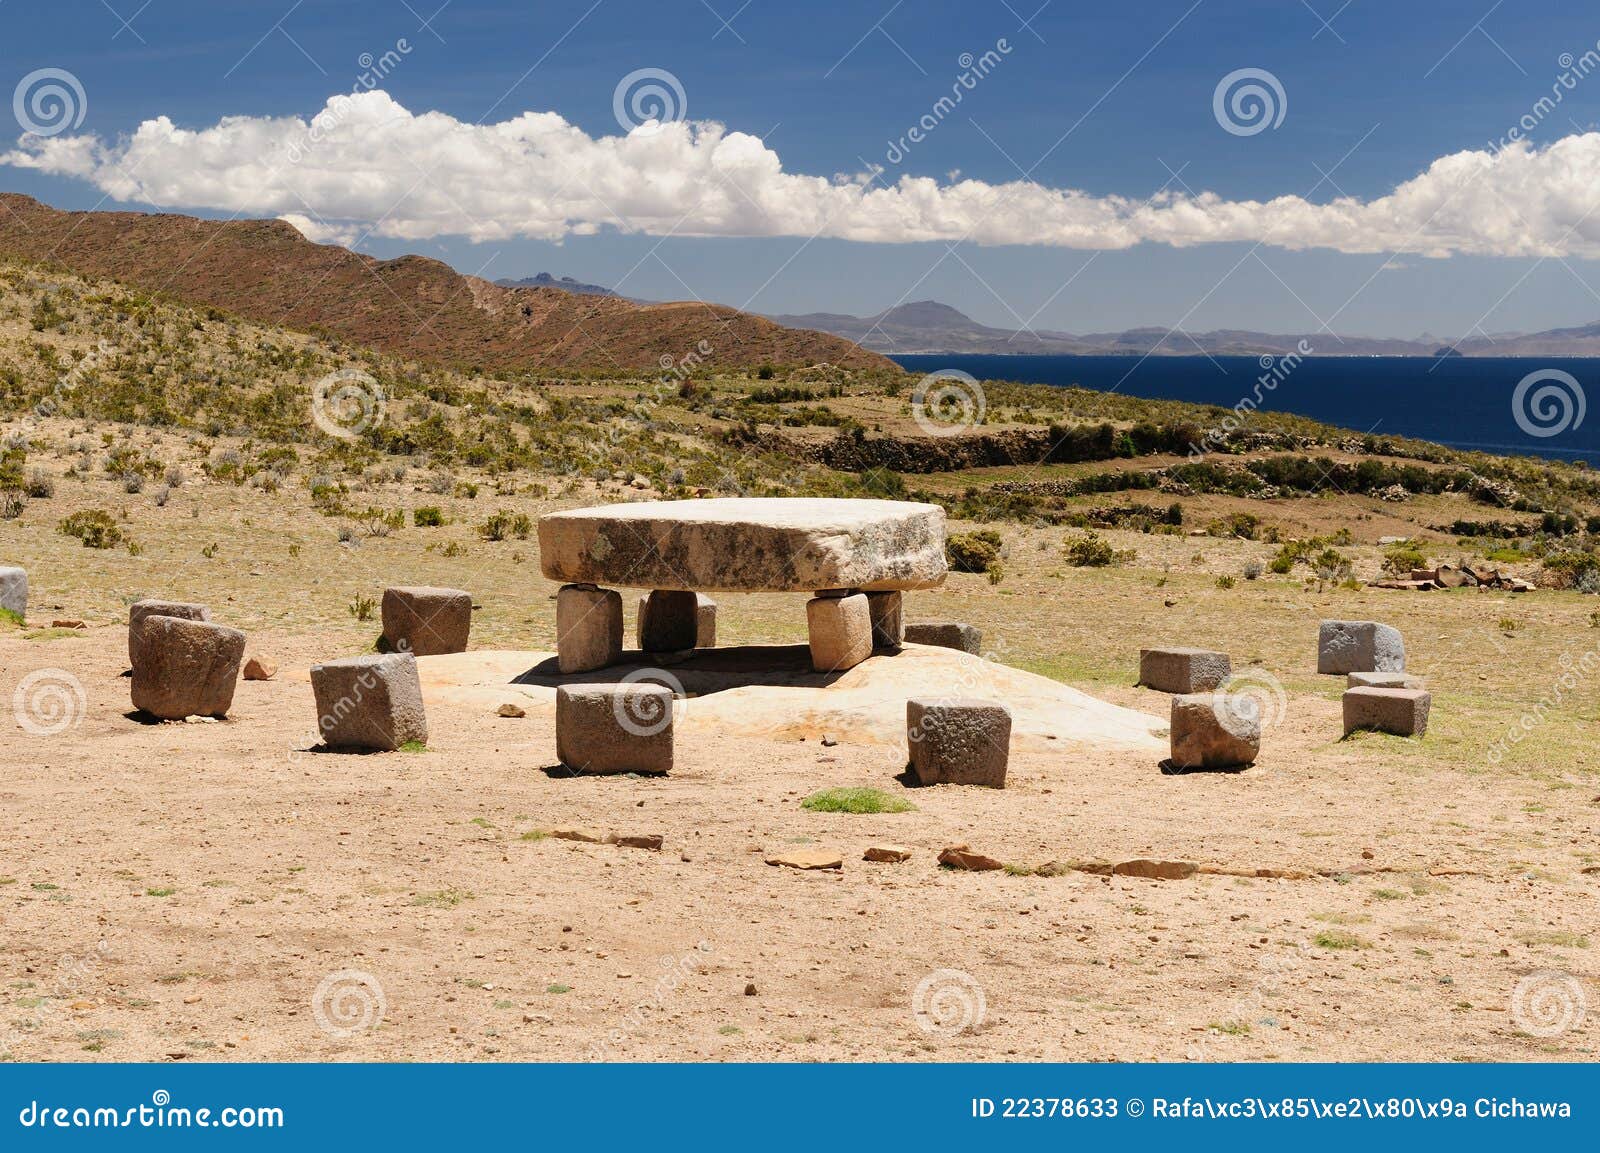 inca ruins, isla del sol, titicaca lake, bolivia